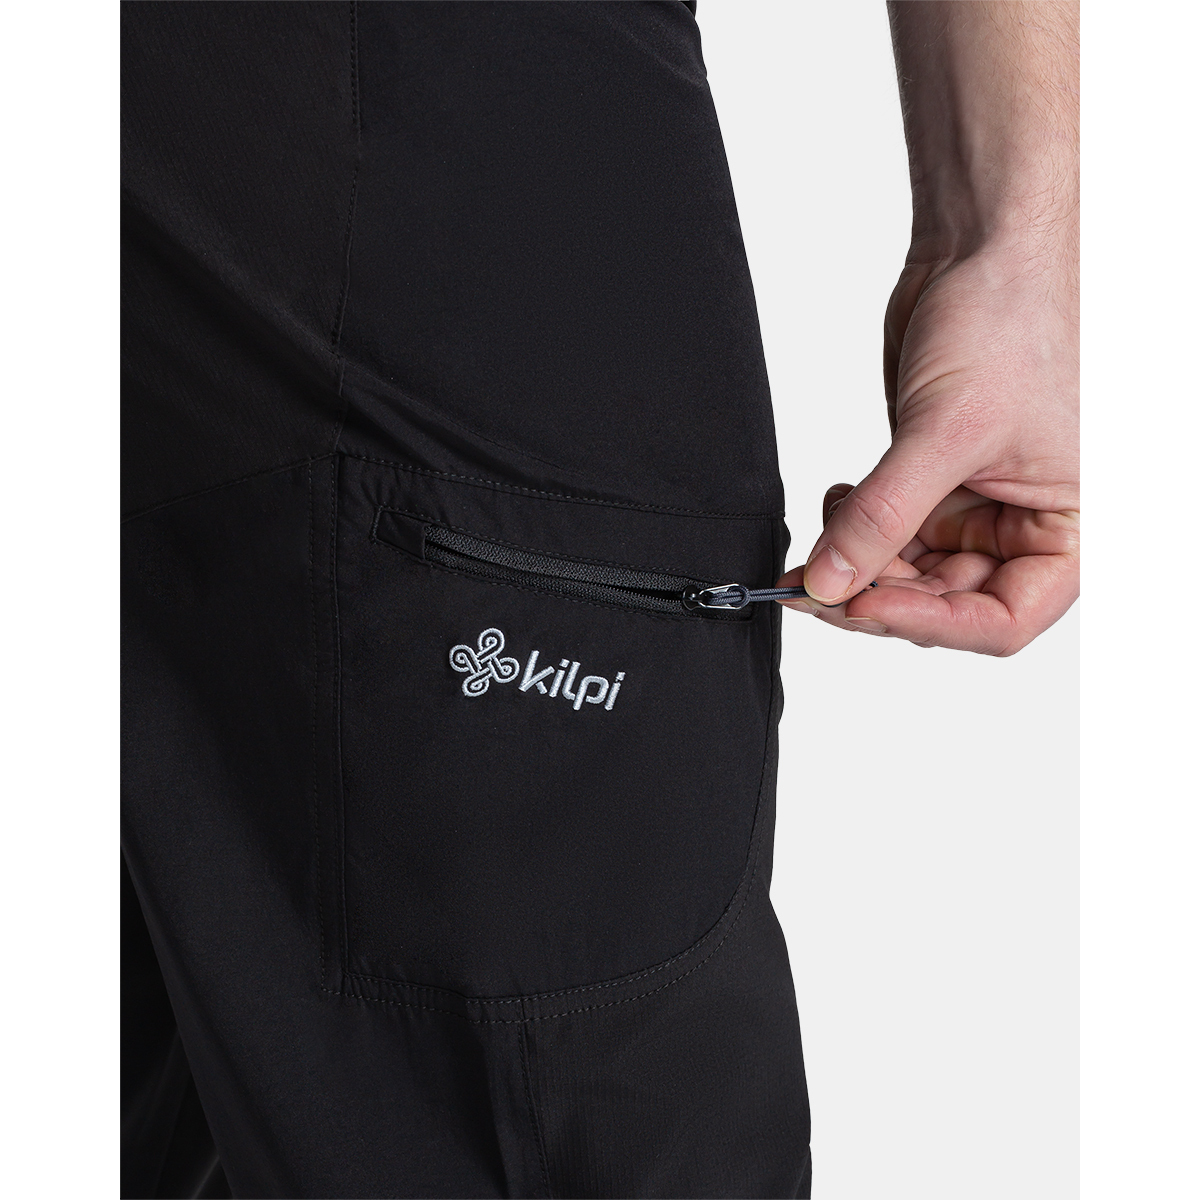 Kilpi Noir Pantalon 3/4 outdoor pour homme OTARA-M GIp46flt